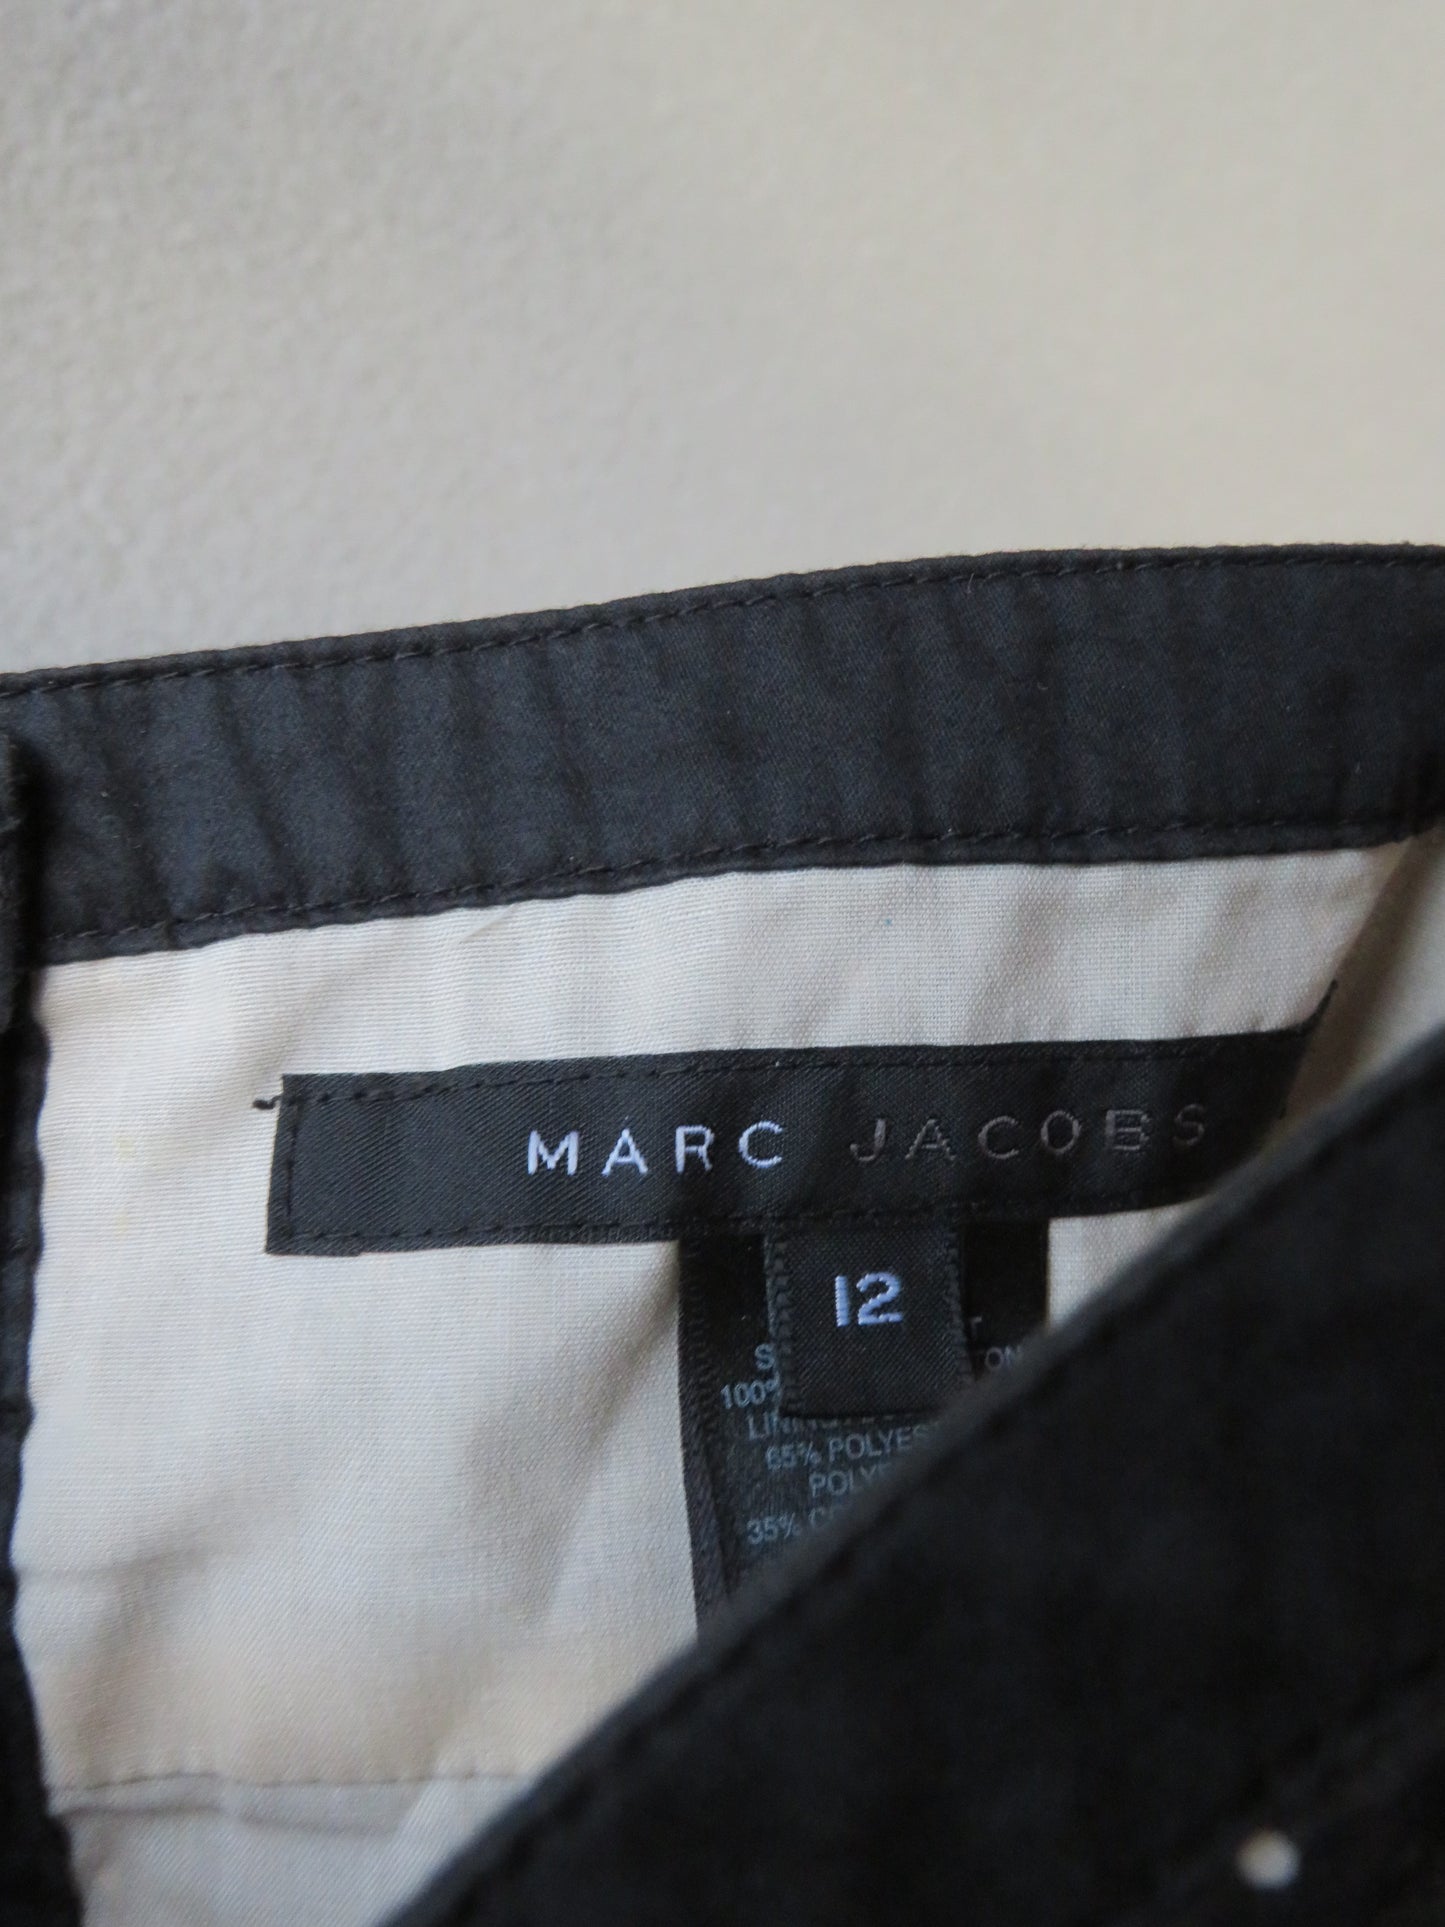 Marc Jacobs top